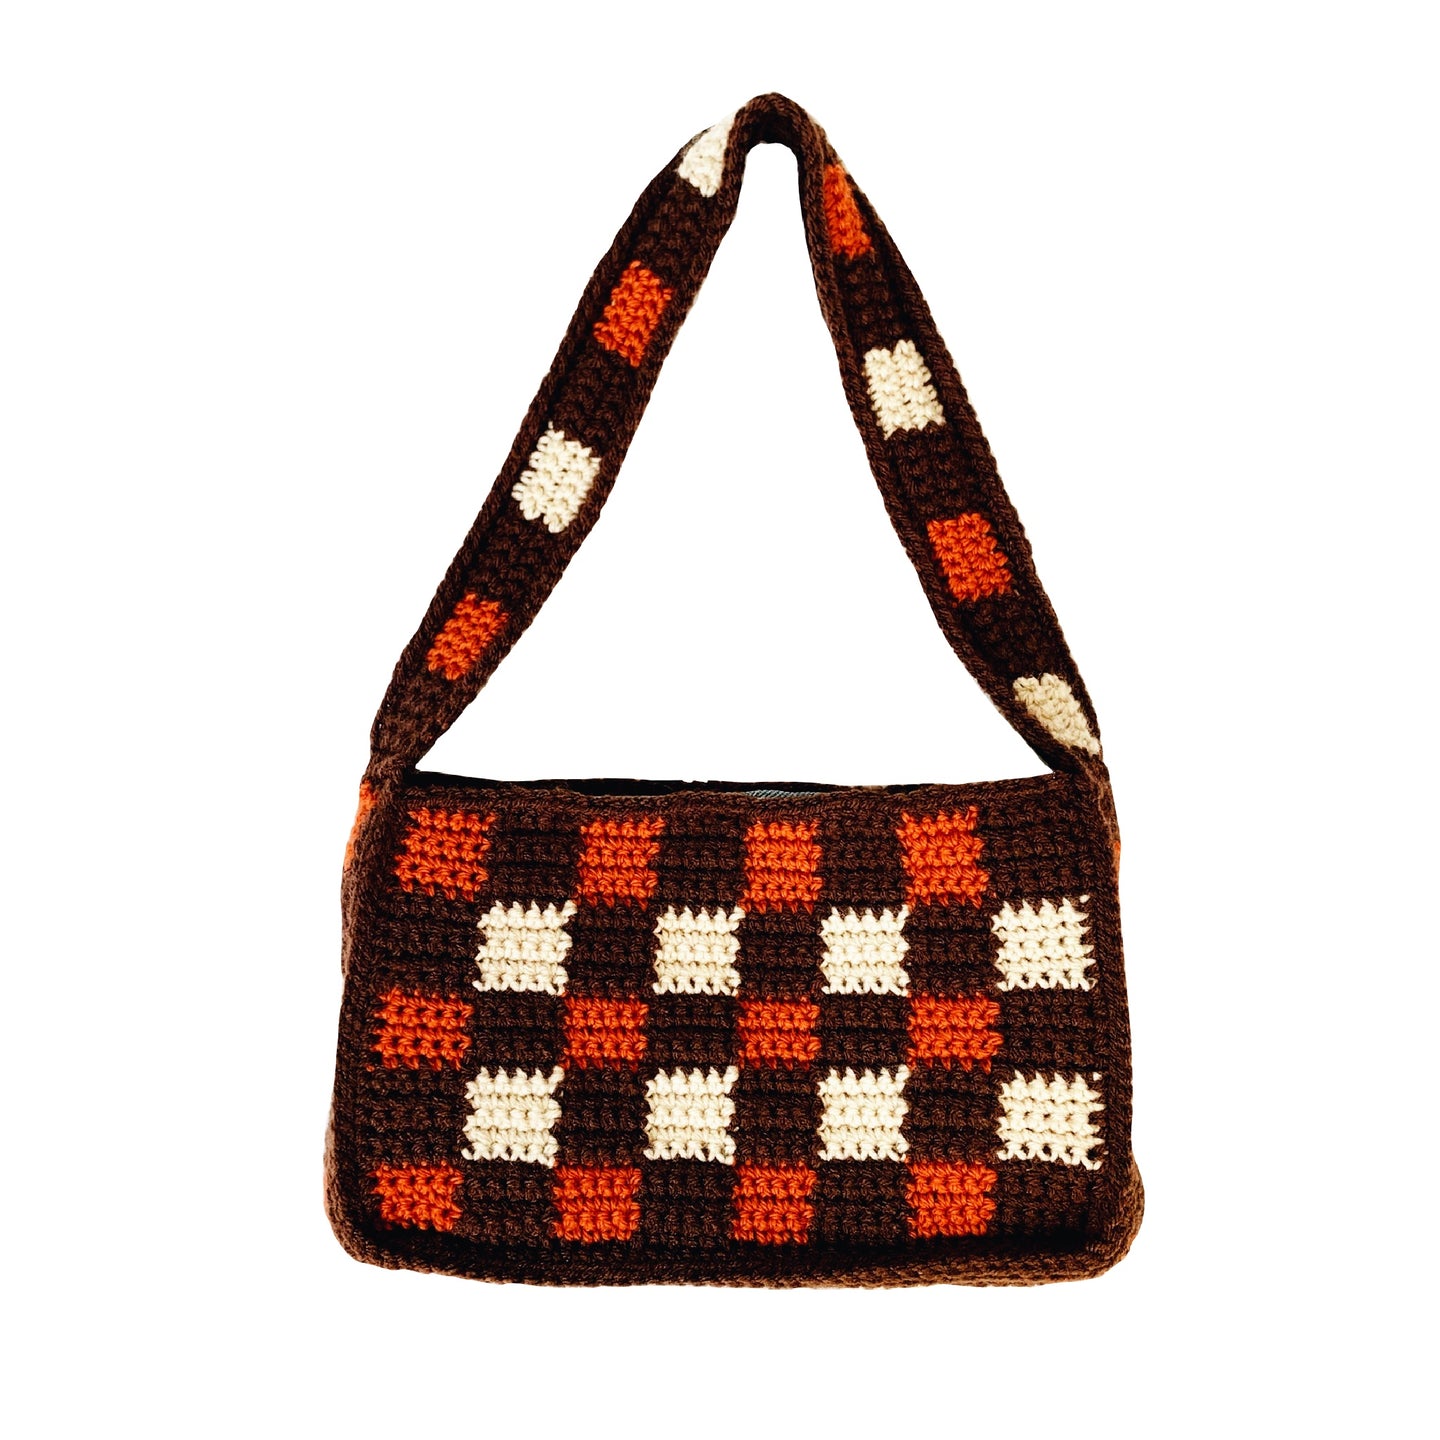 Retro Checkered Shoulder Bag by Carolannie Crochet